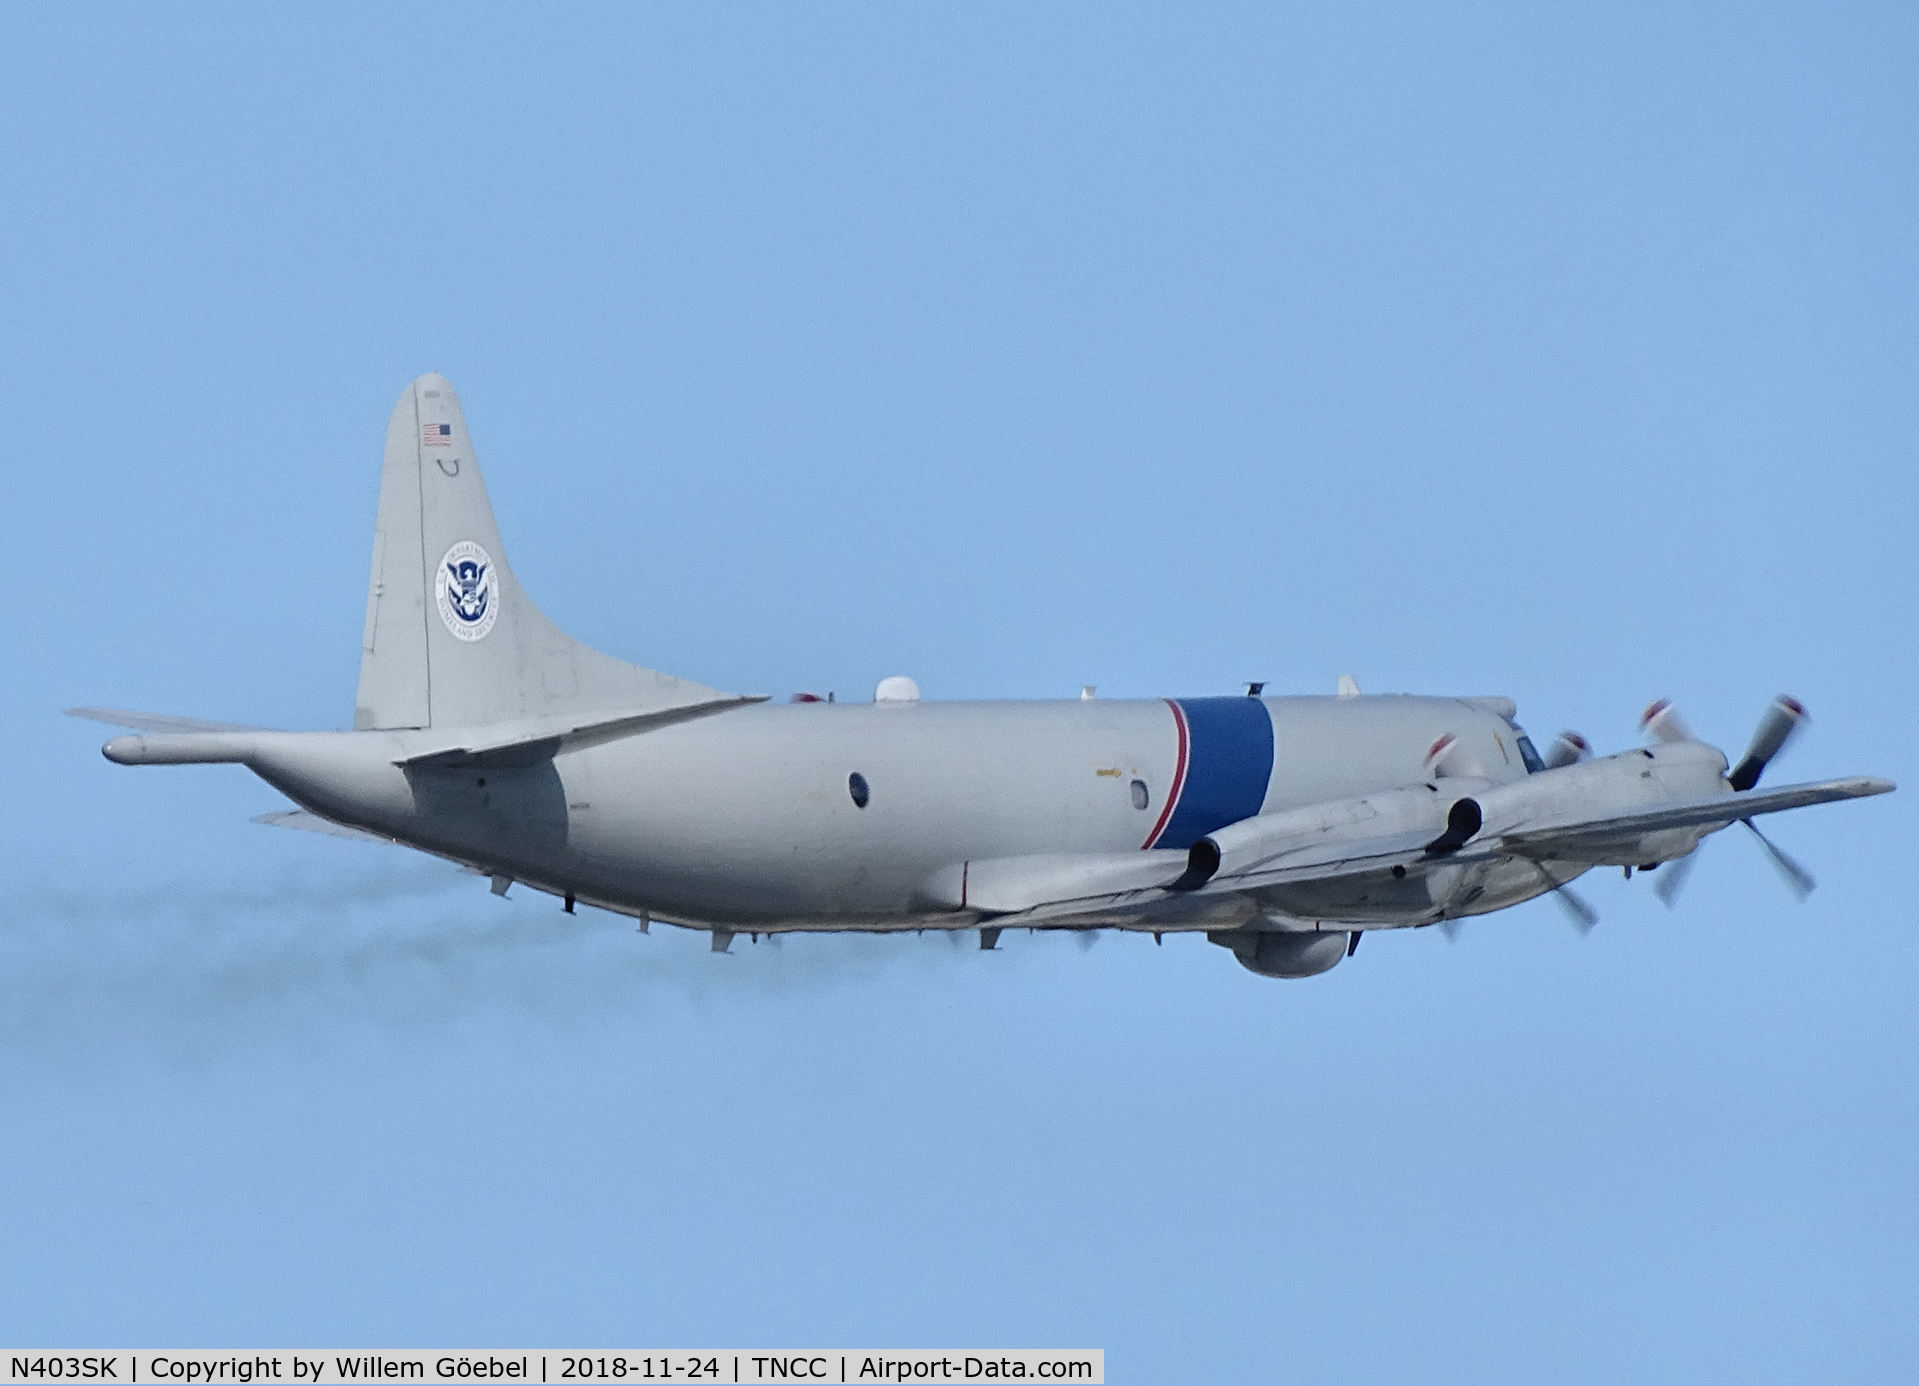 N403SK, Lockheed P-3B Orion C/N 185-5284, Take off from TNCC